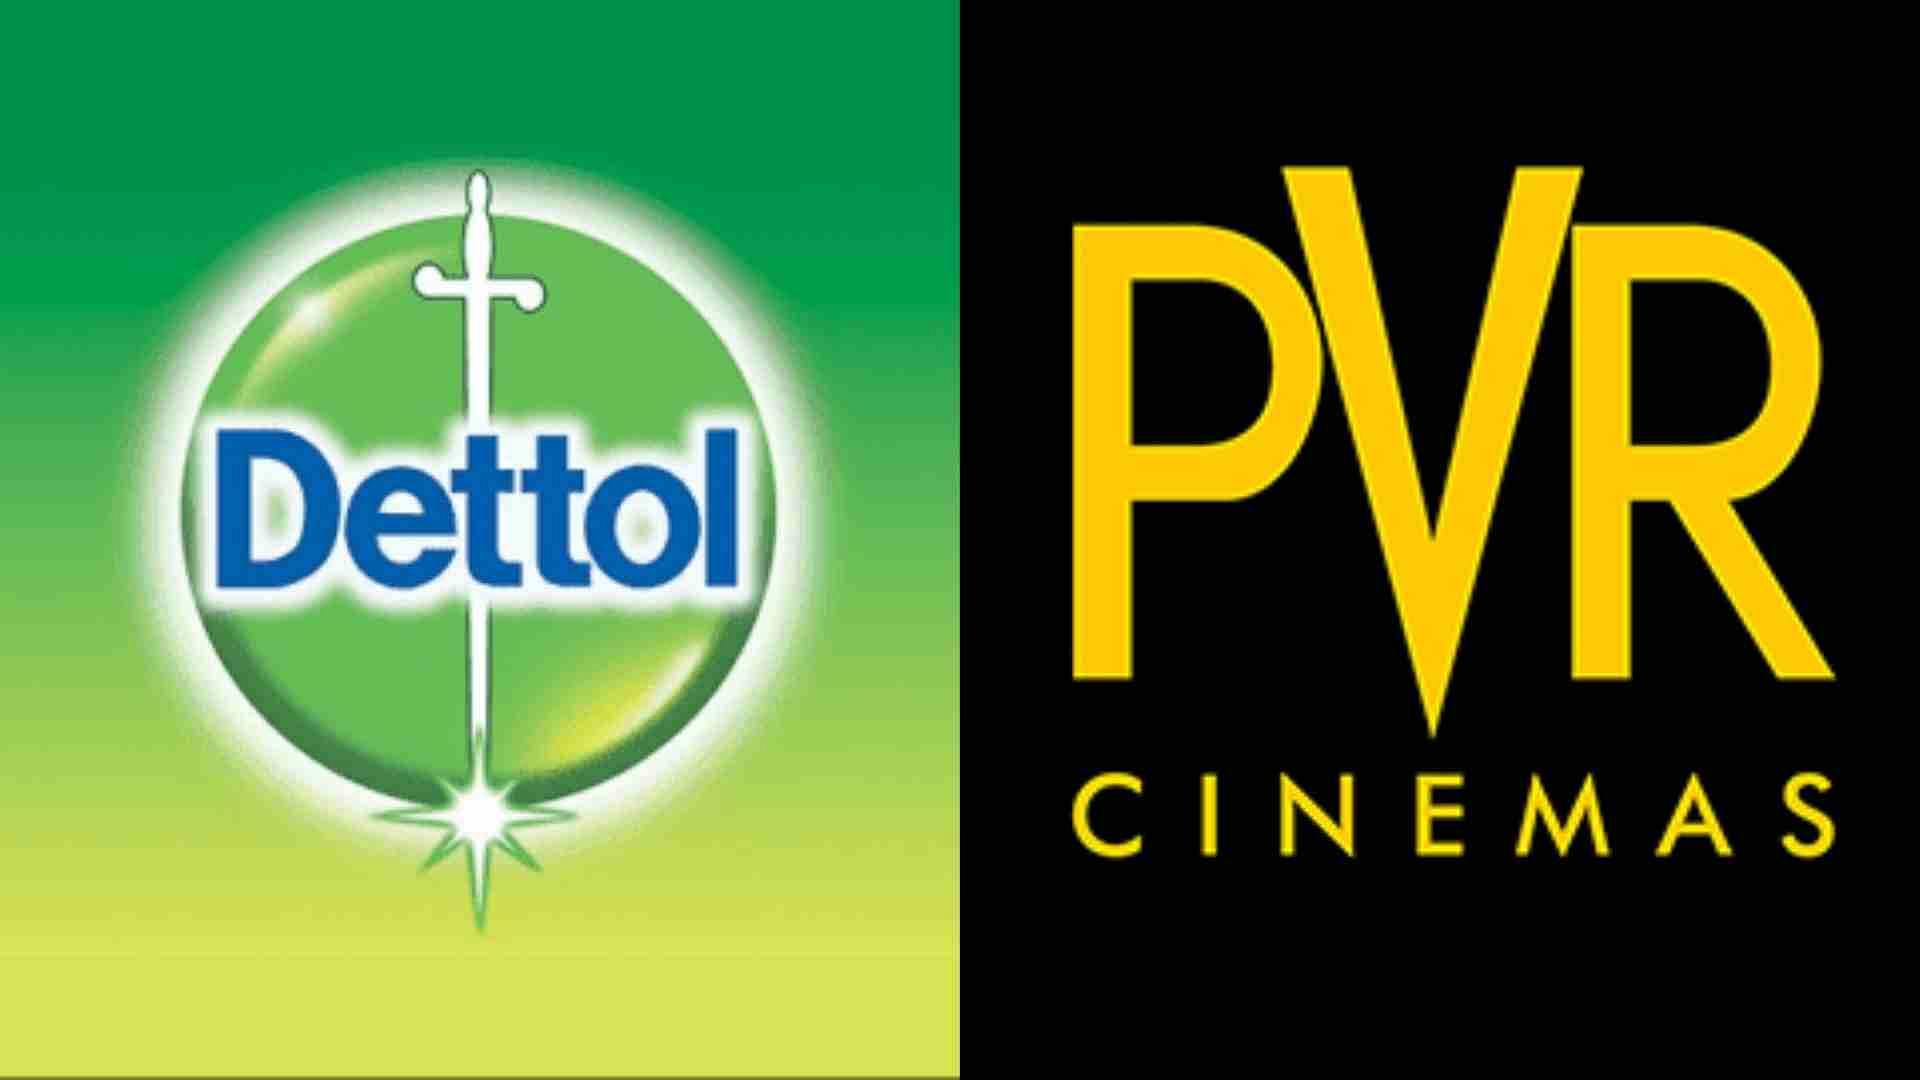 PVR Cinemas ties up with GyFTR